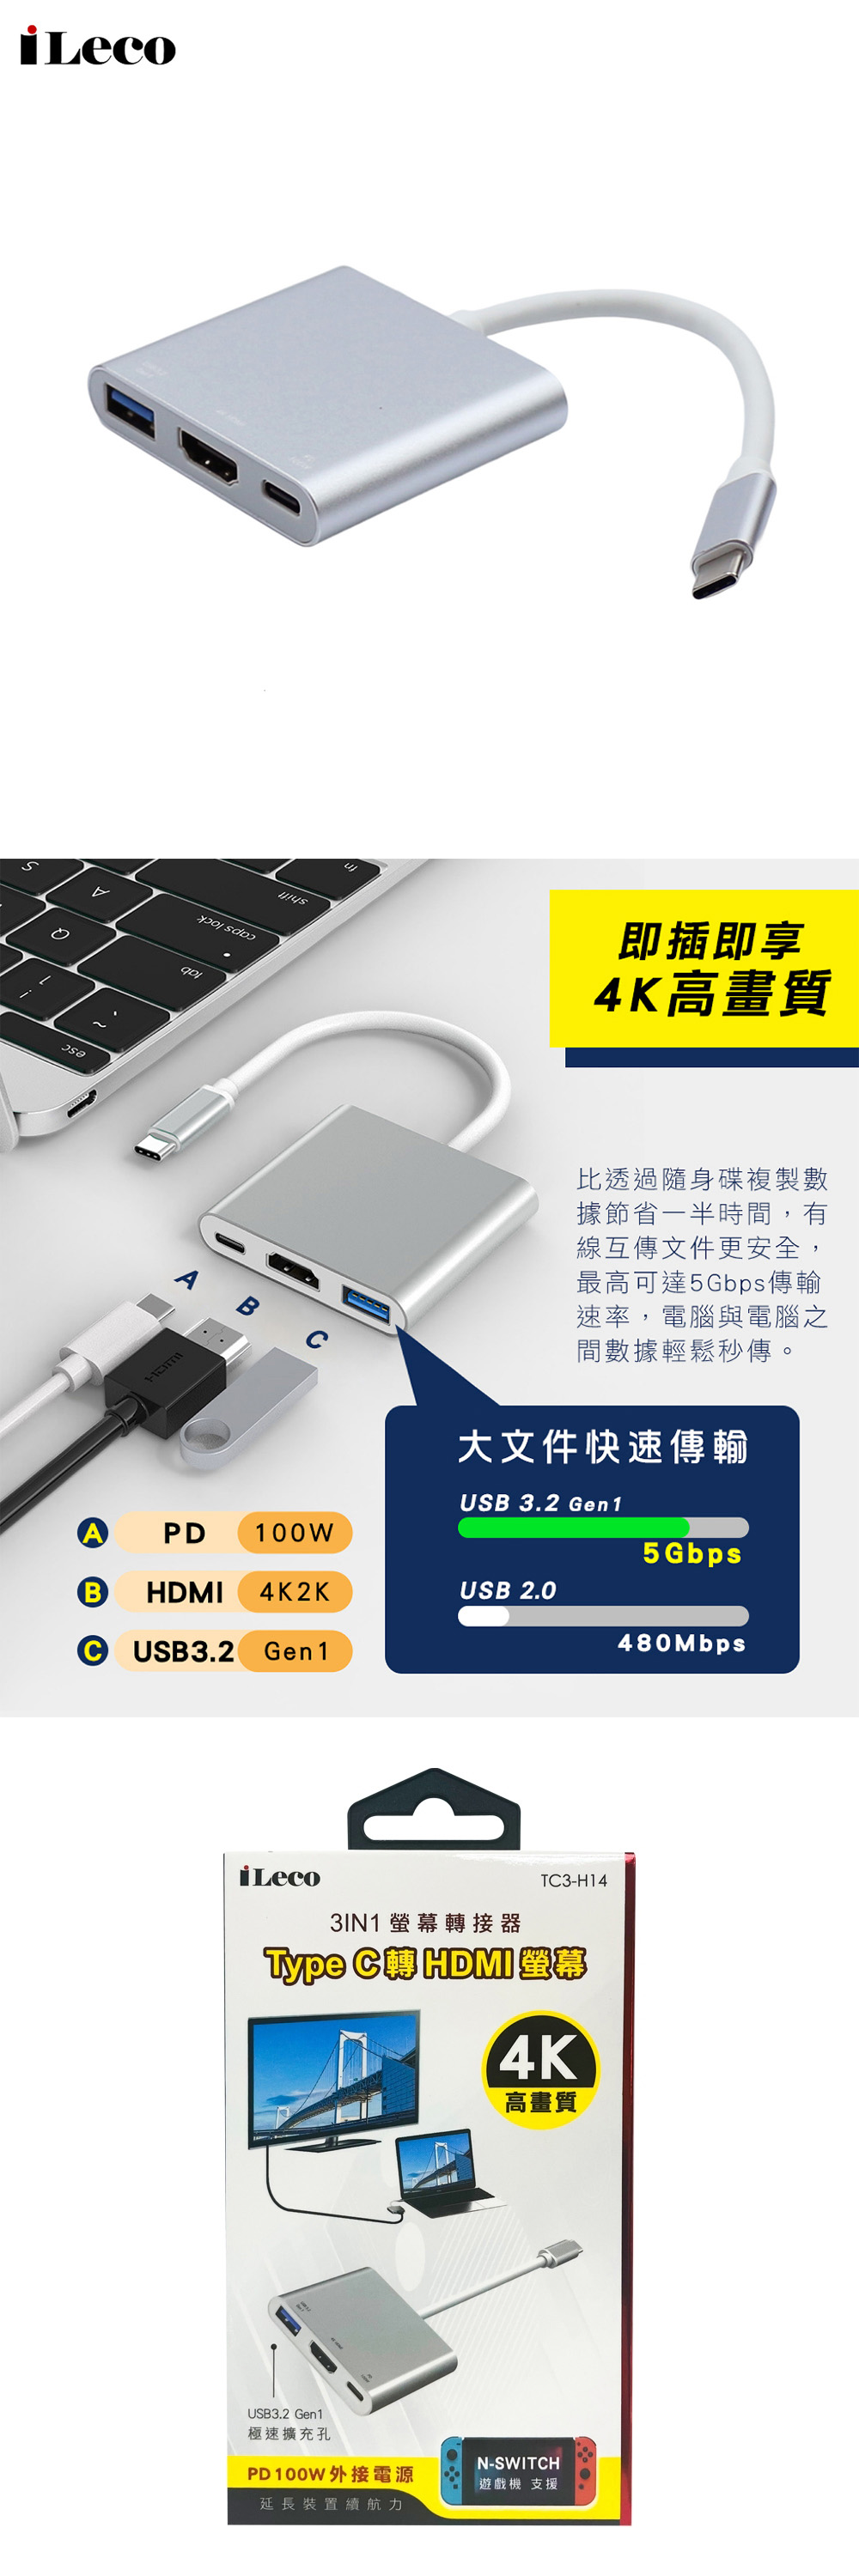 轉接器 USB USB HDMI USB 擴充